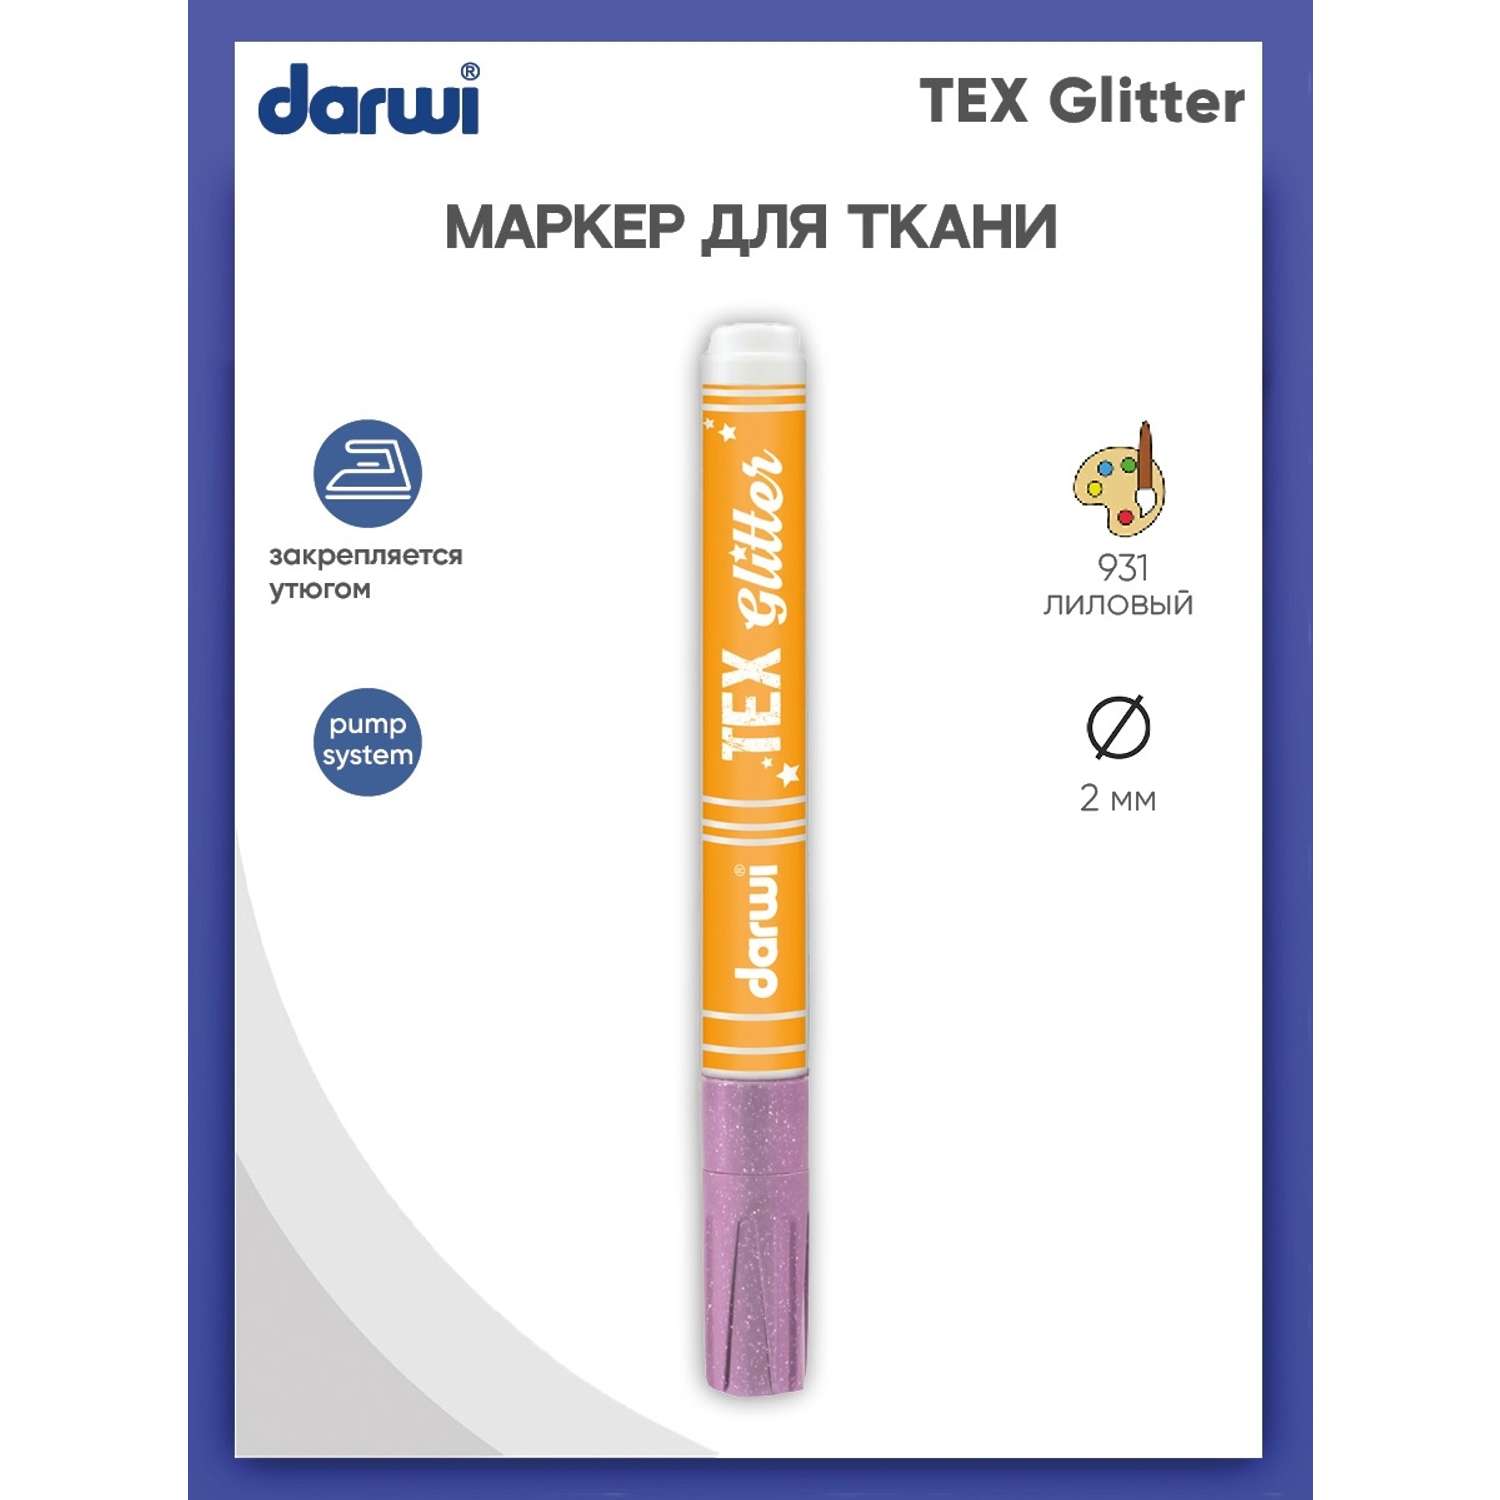 Маркер Darwi для ткани TEX Glitter DA0140013 2 мм с блестками 931 лиловый - фото 1